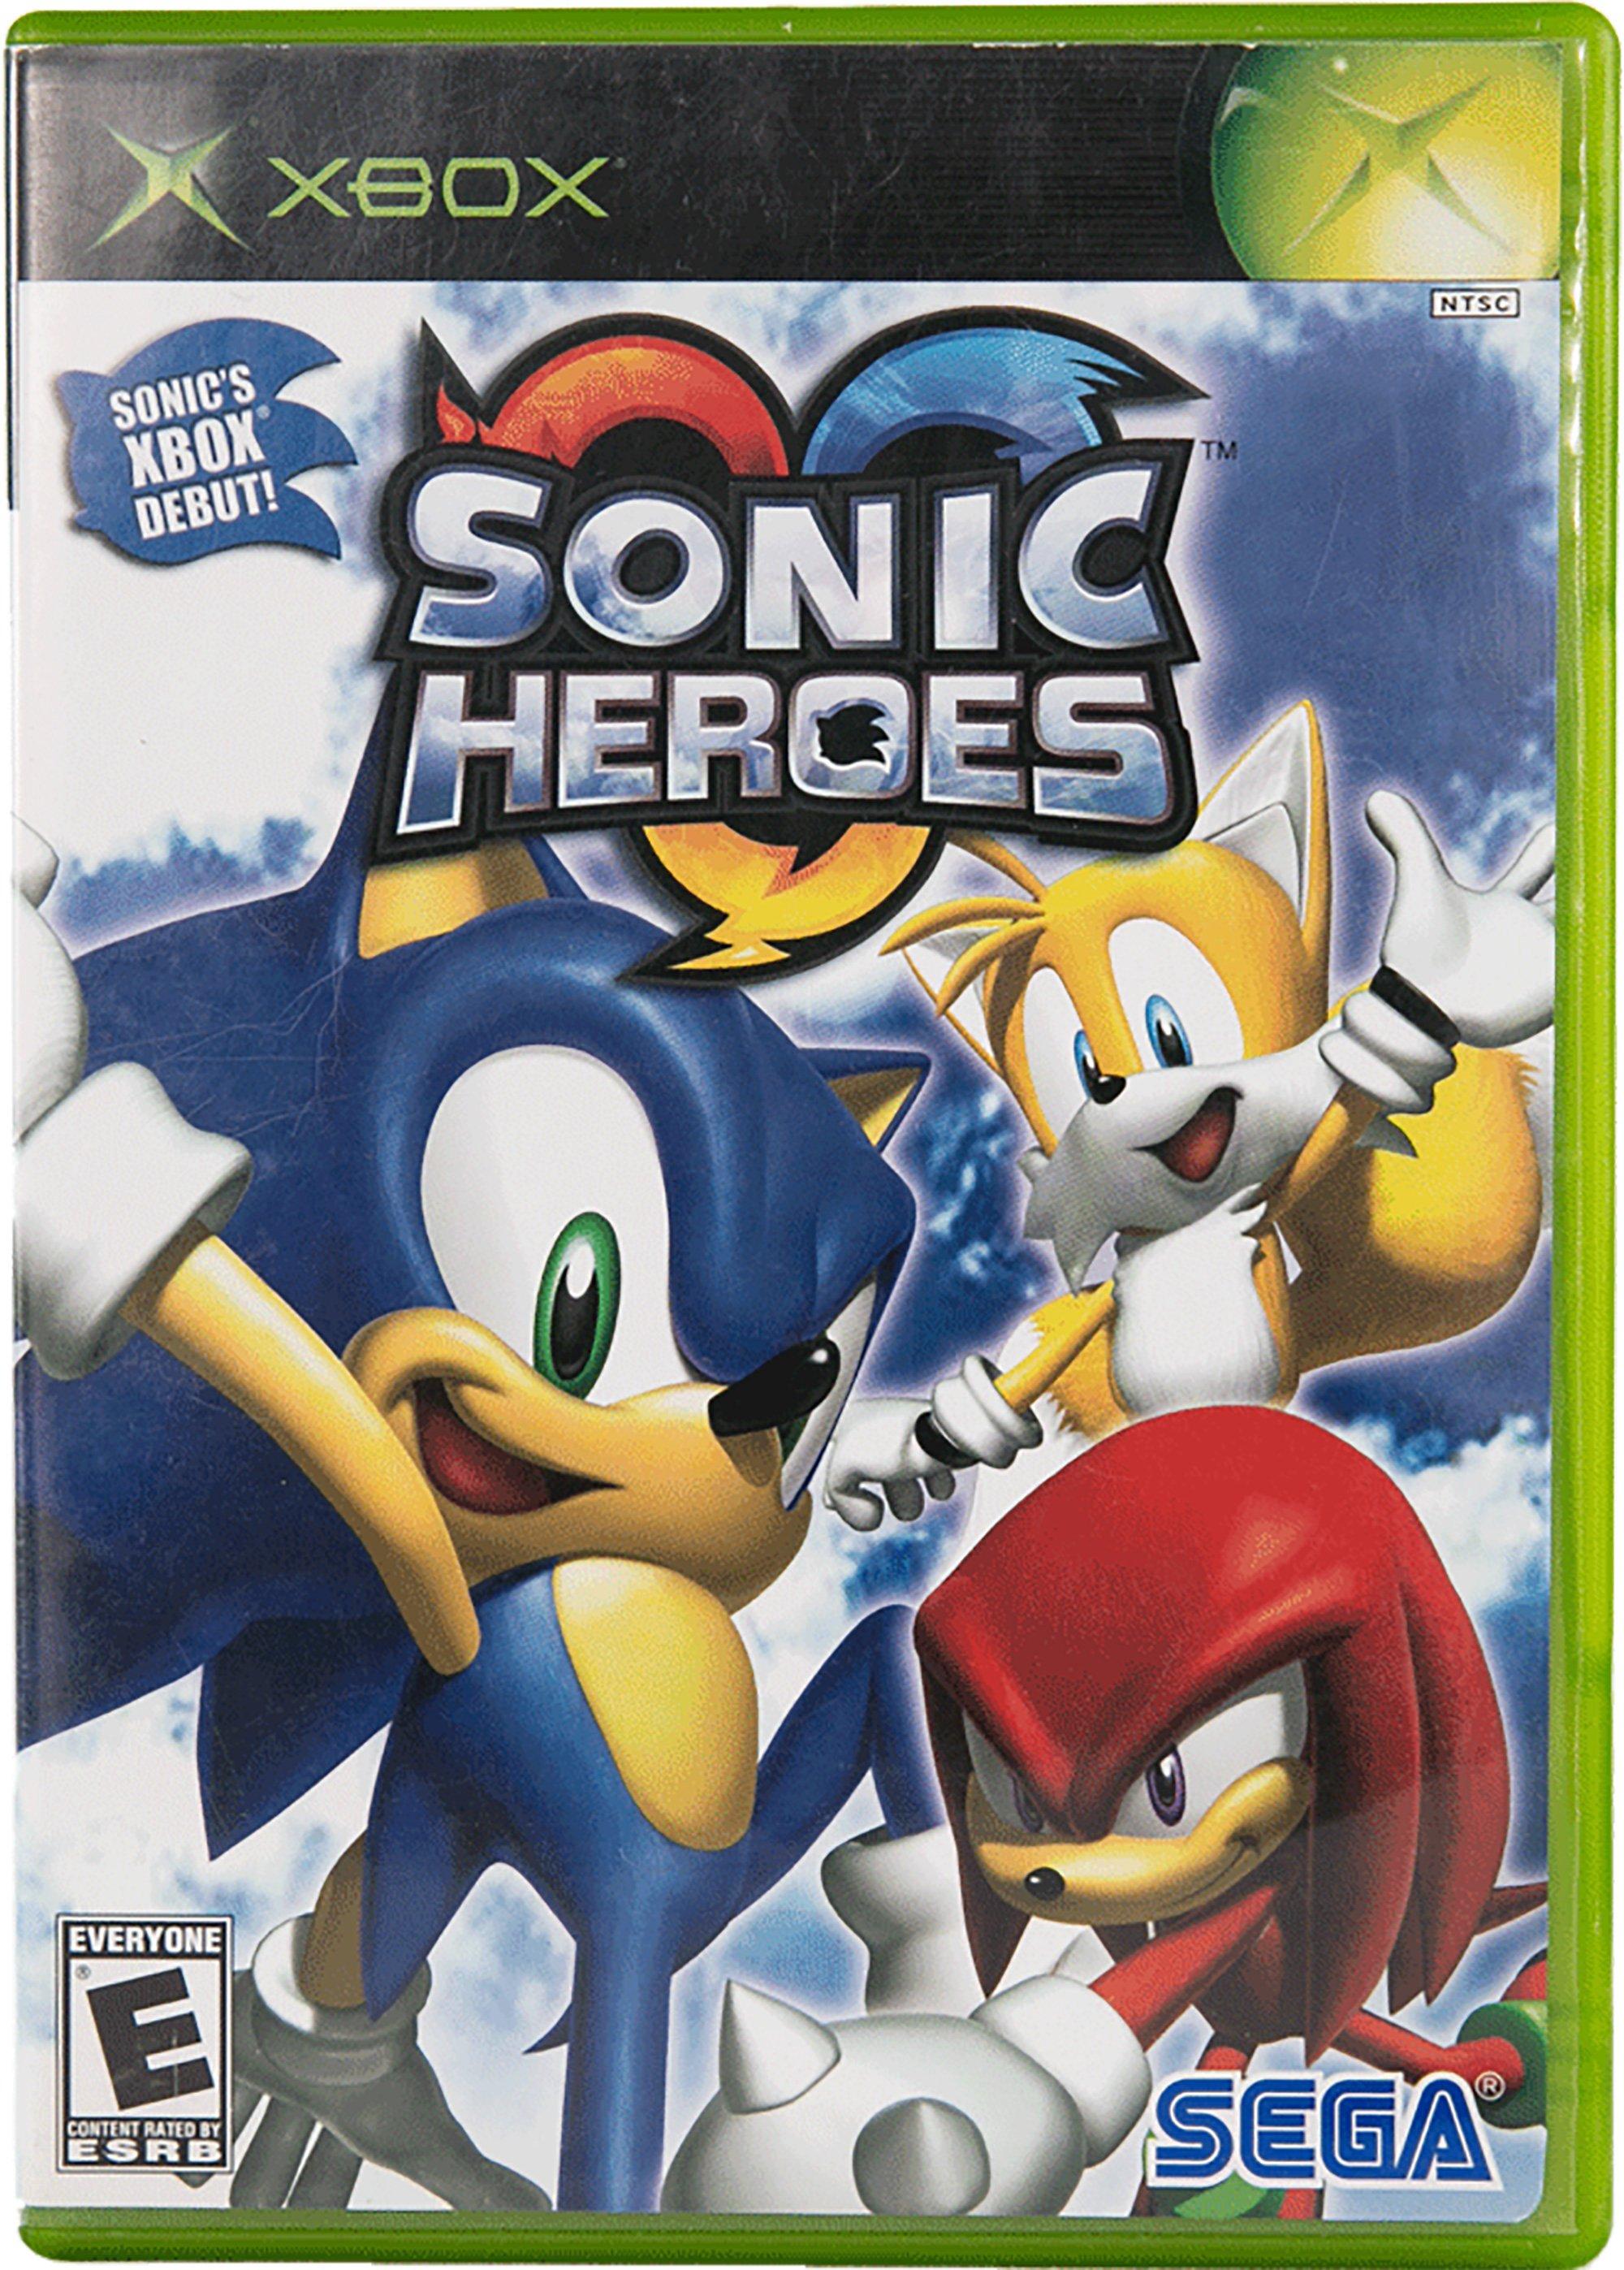 Sonic Xbox 360 Game: Promoções